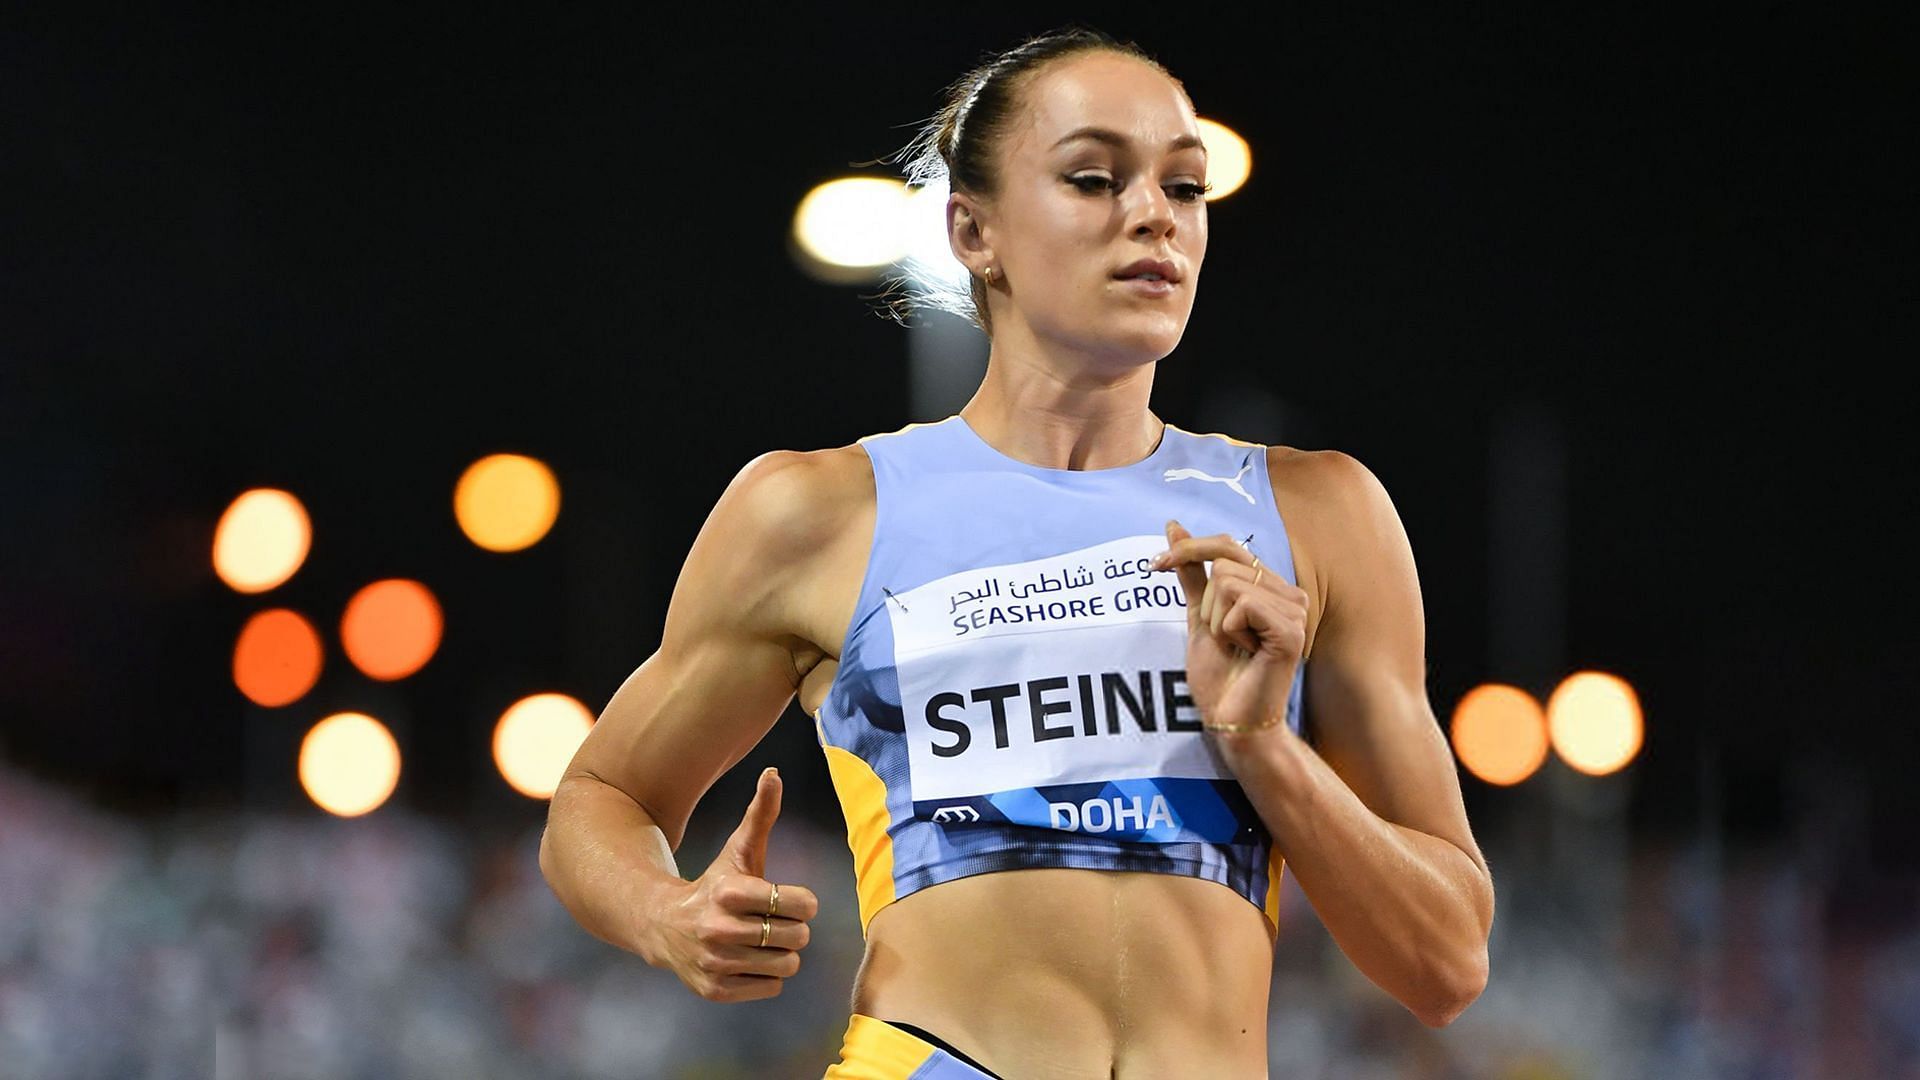 Abby Steiner, US 200m indoor record holder